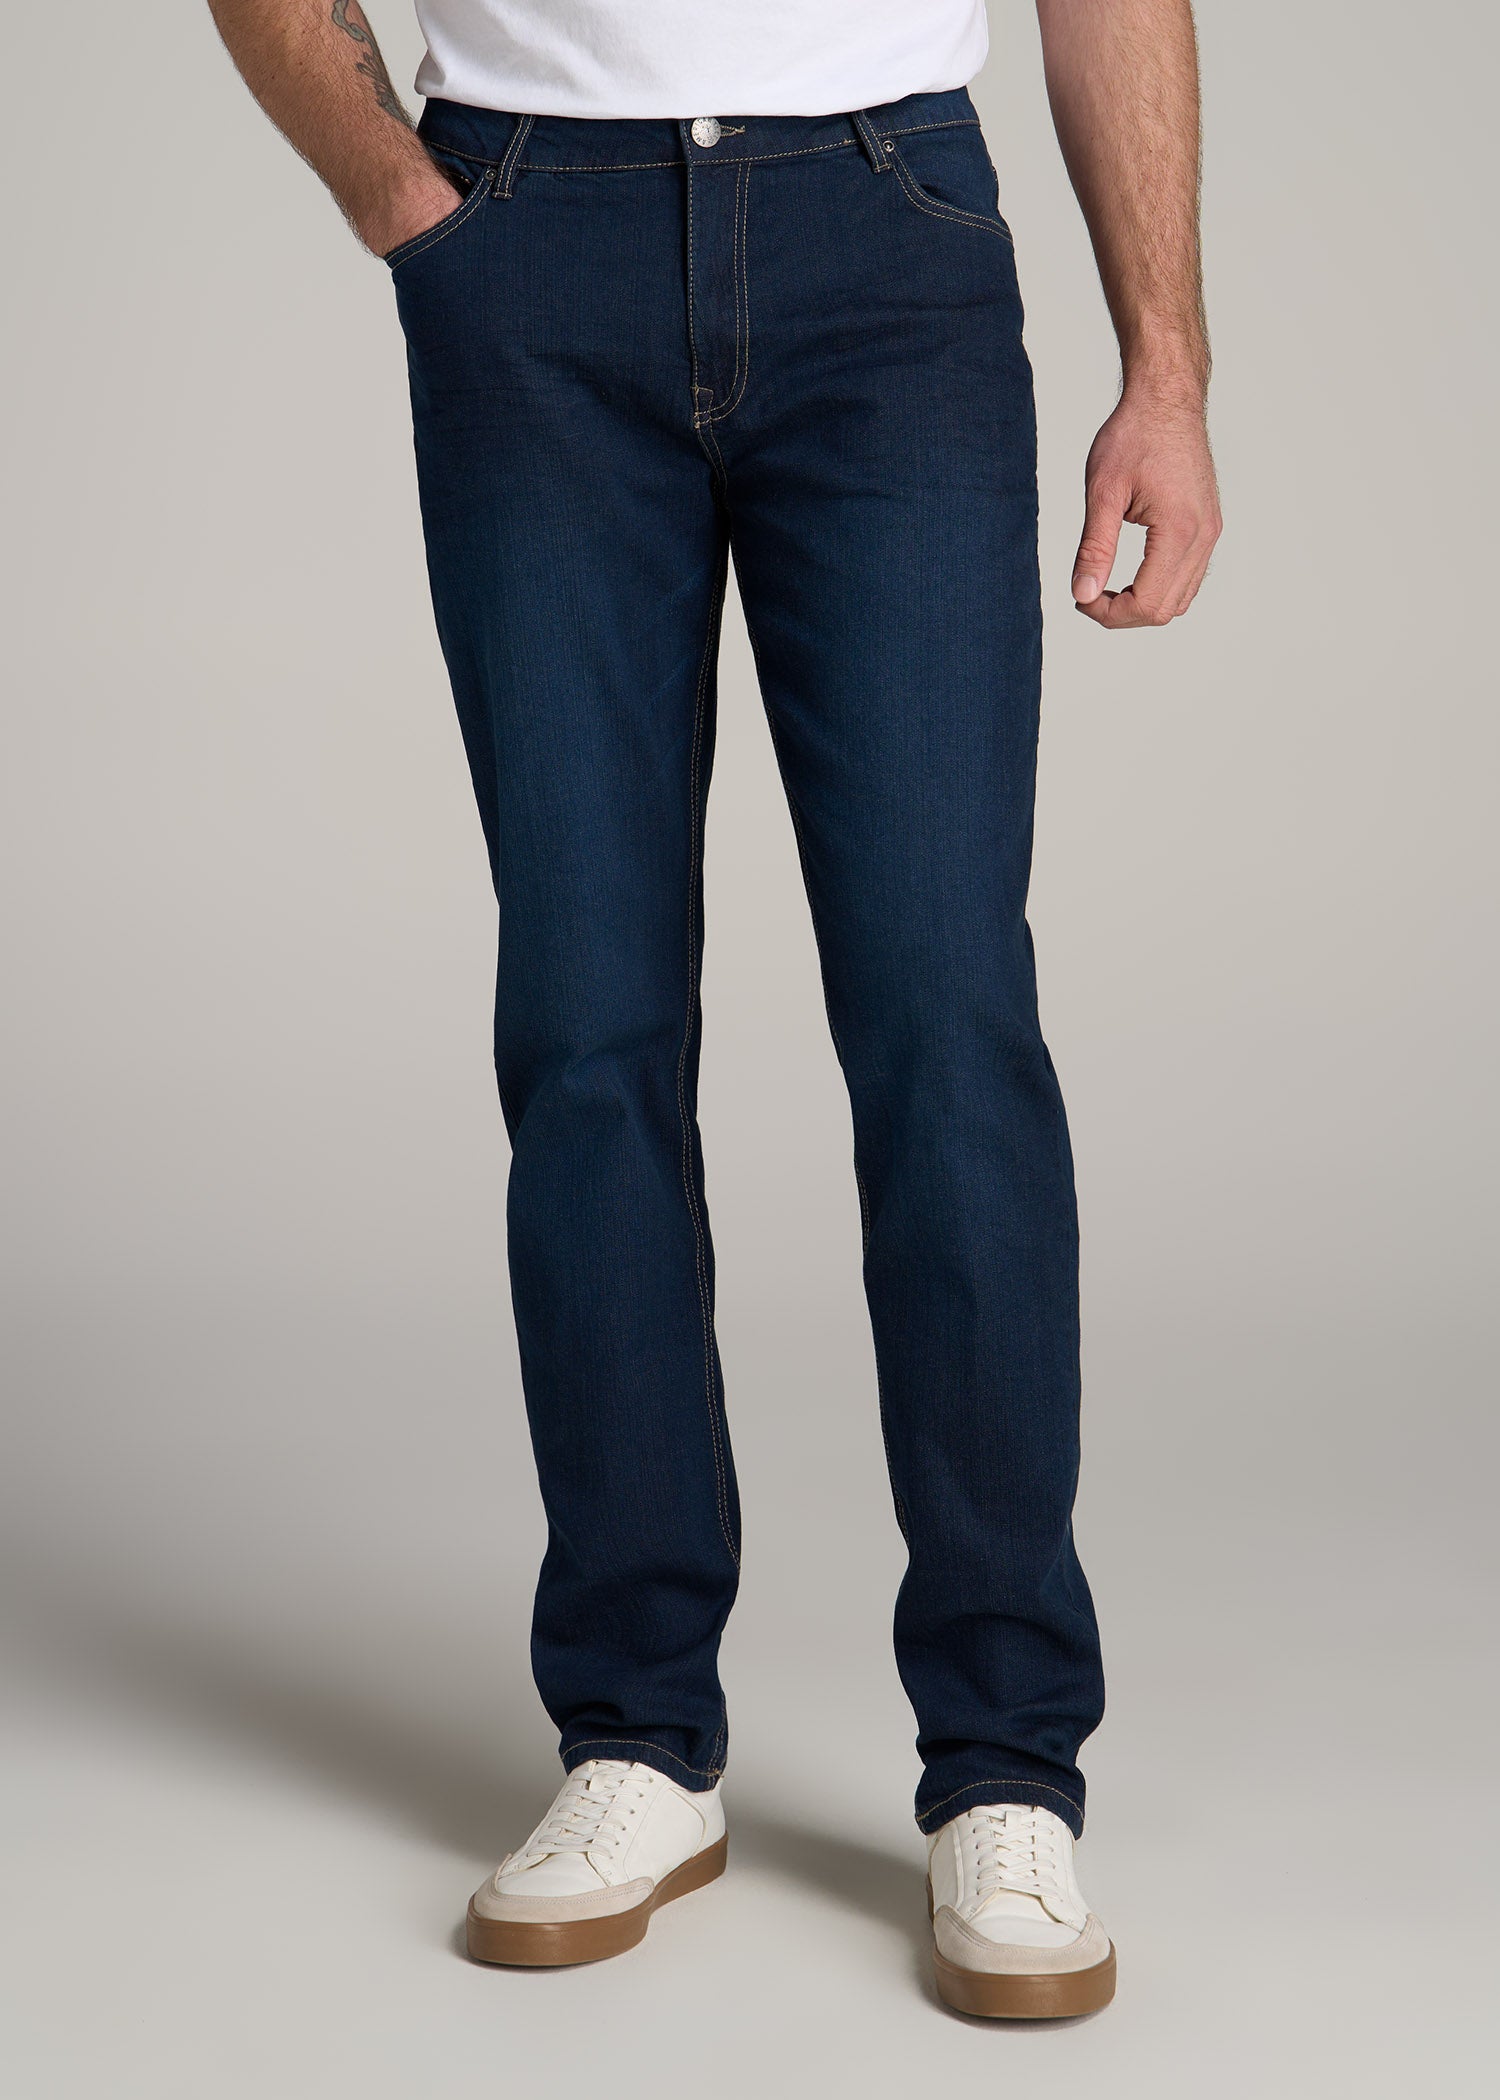 Men\'s American Steel Blue Jeans Tall Semi-Relaxed |